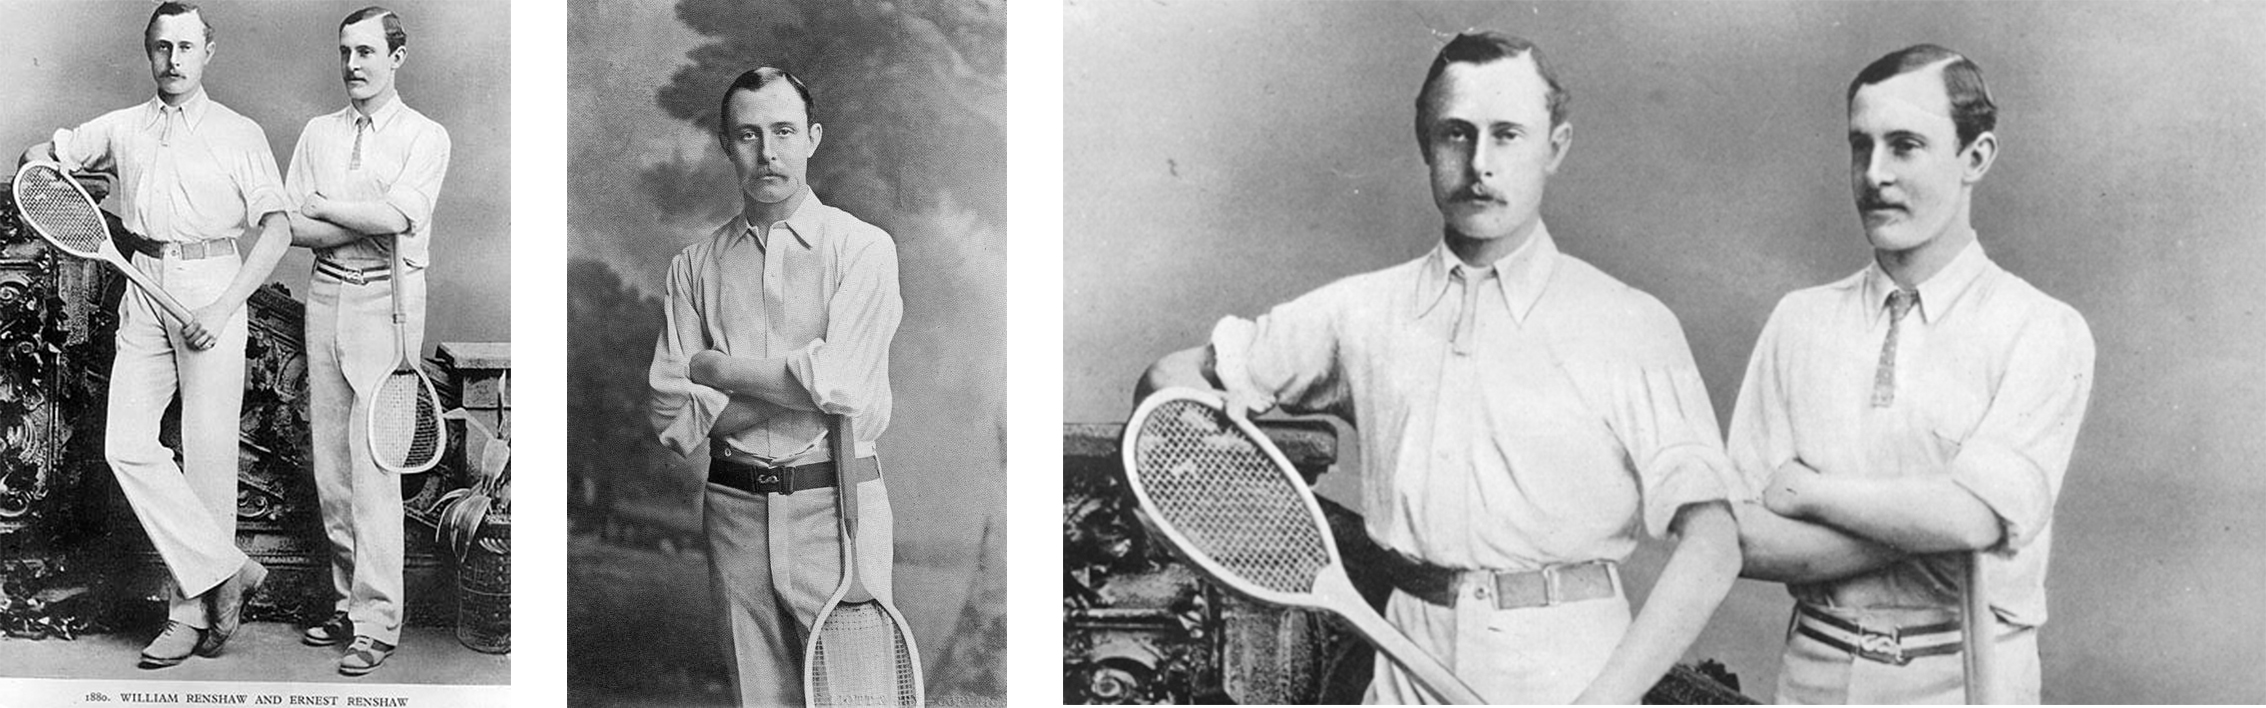 historia del tenis hermanos Historia del tenis